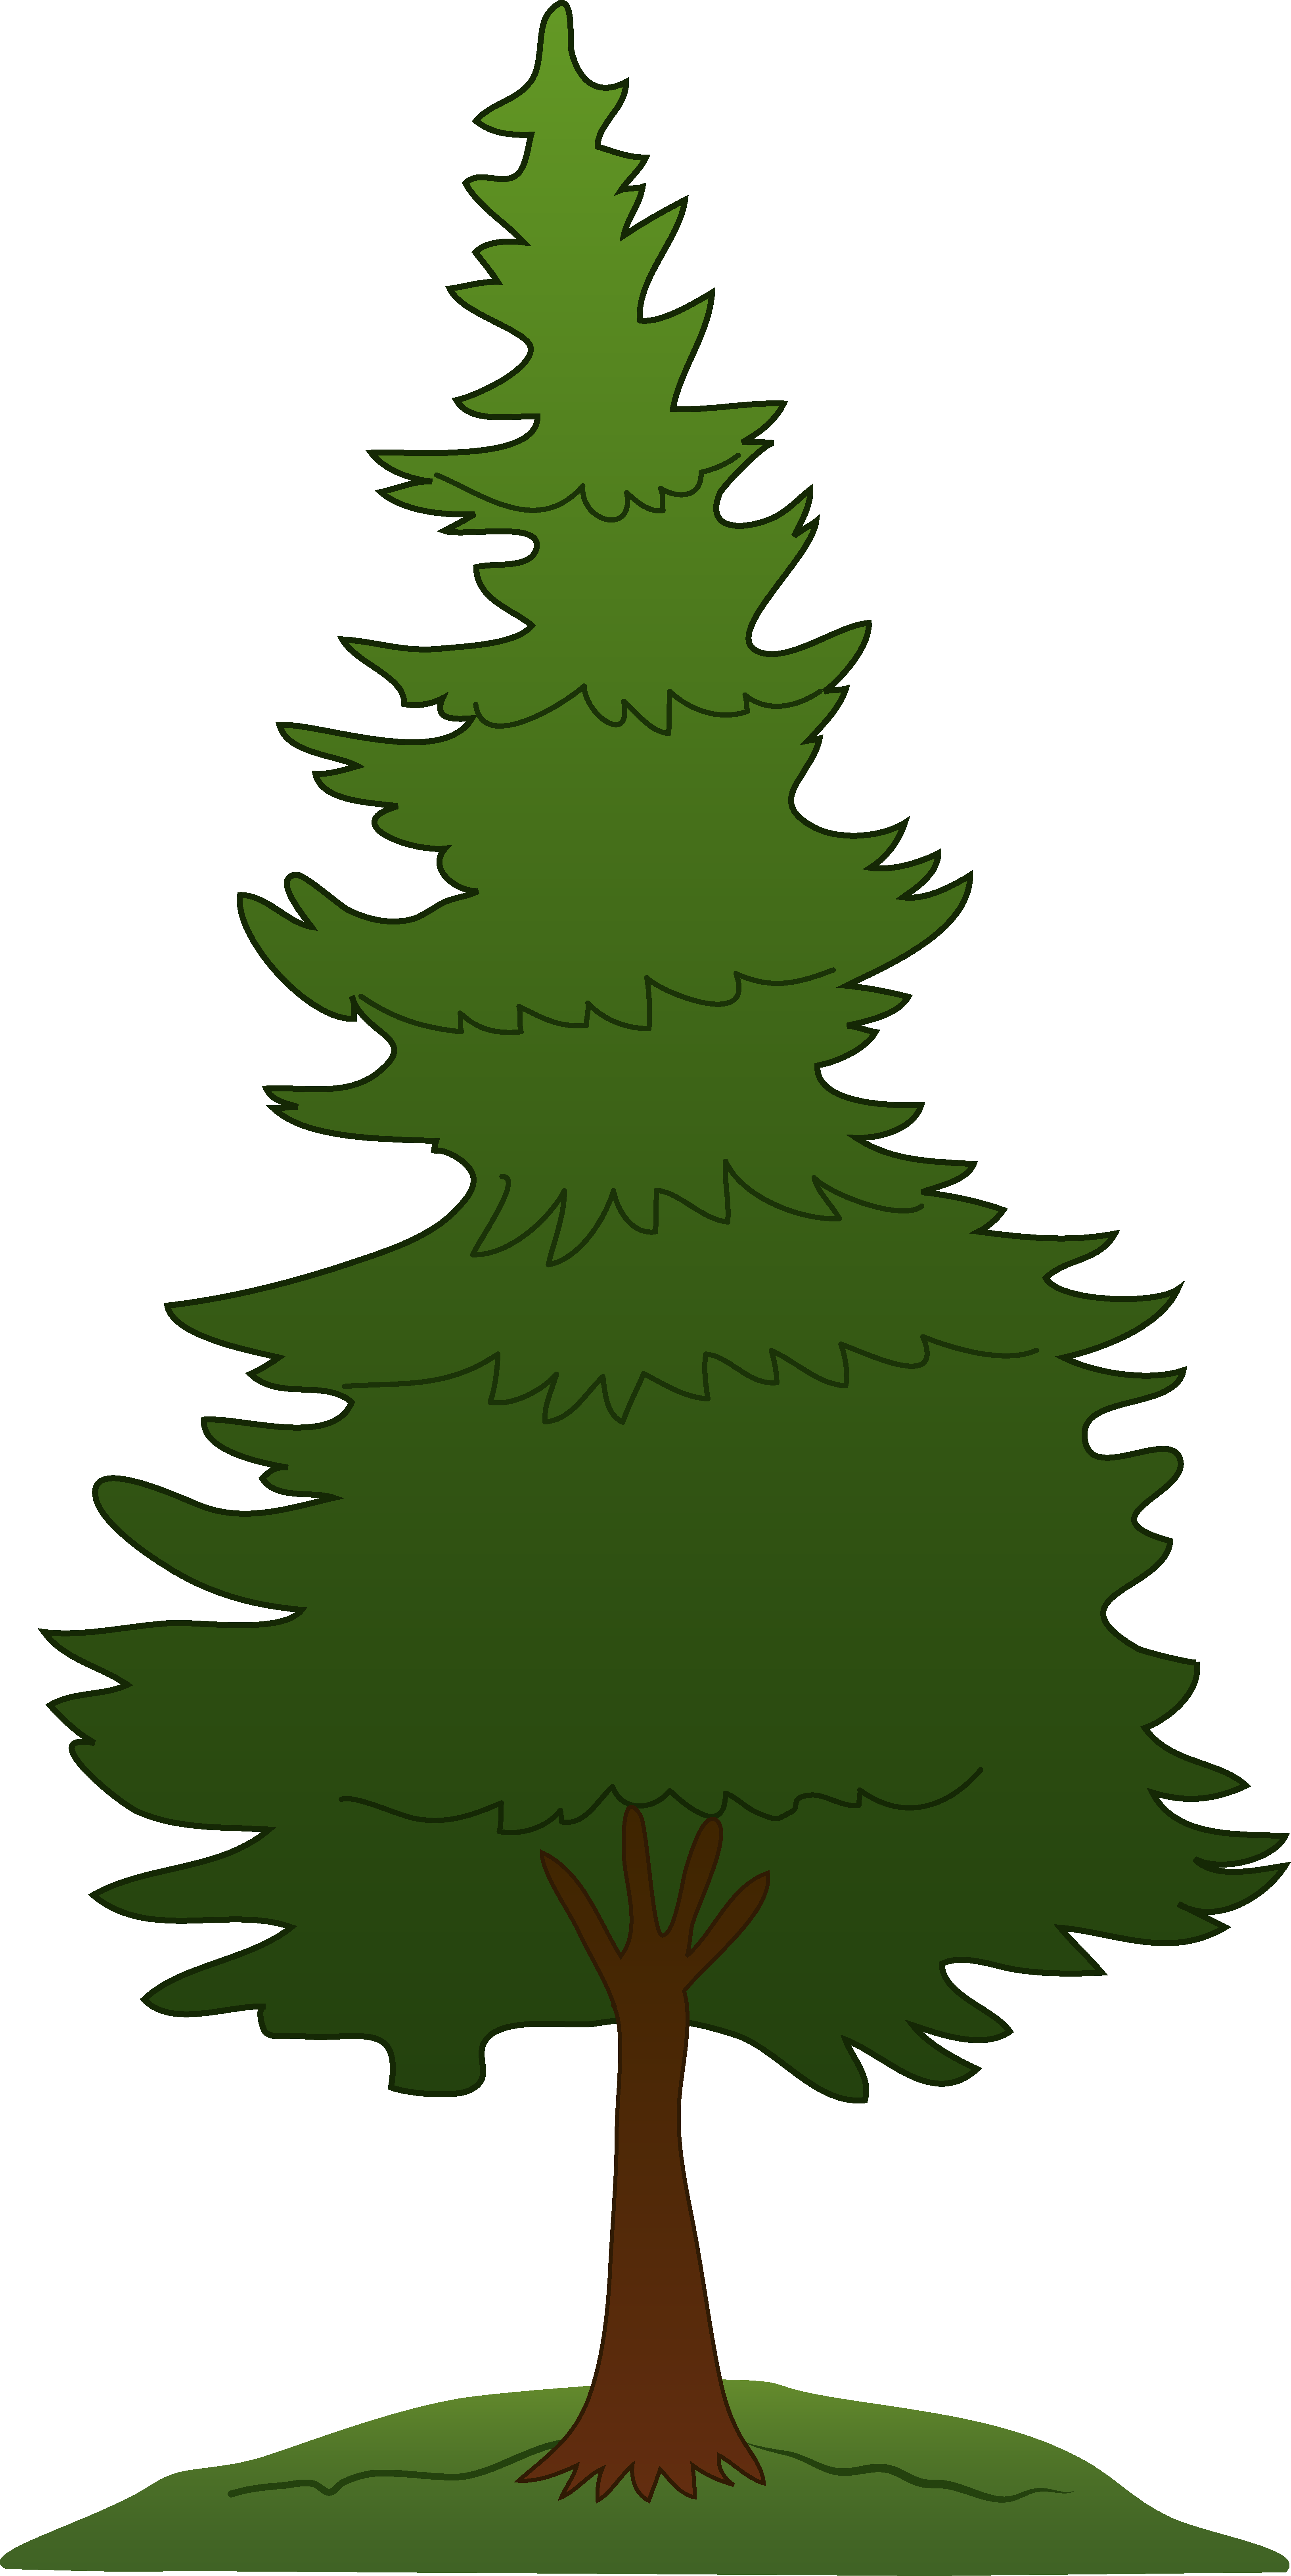 pine trees transparent background